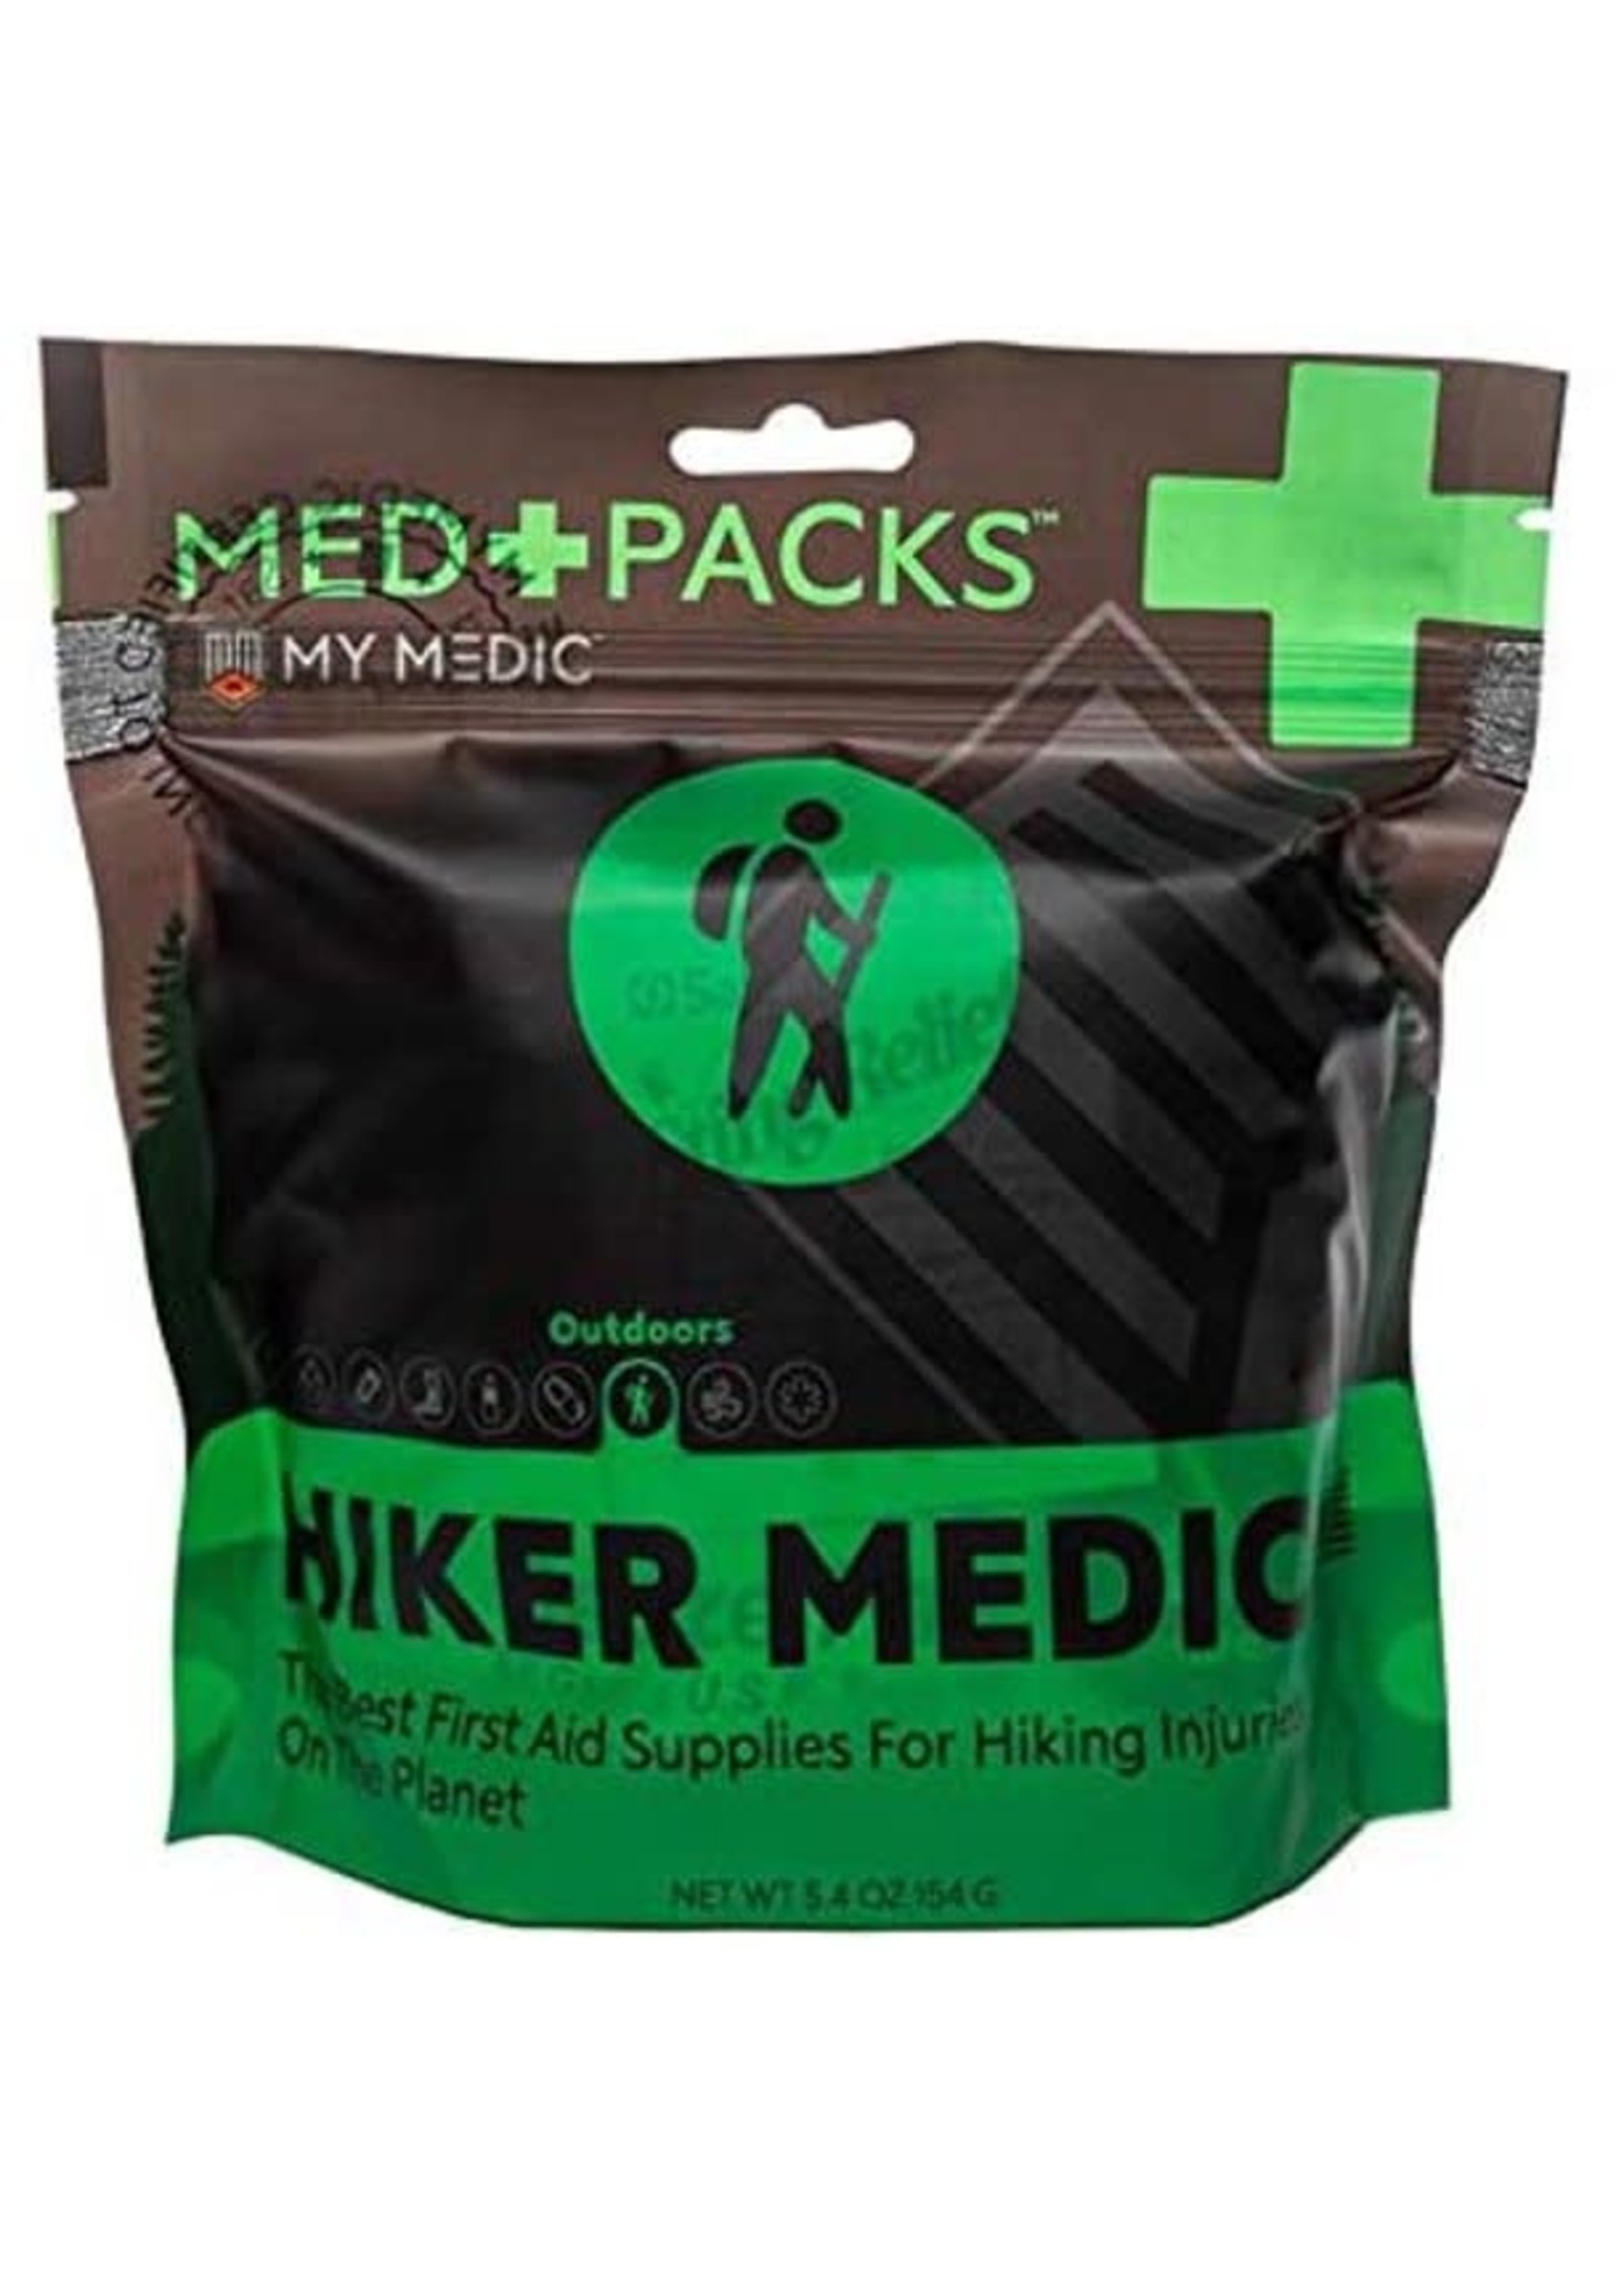 My Medic My Medic Hiker Medic Kit